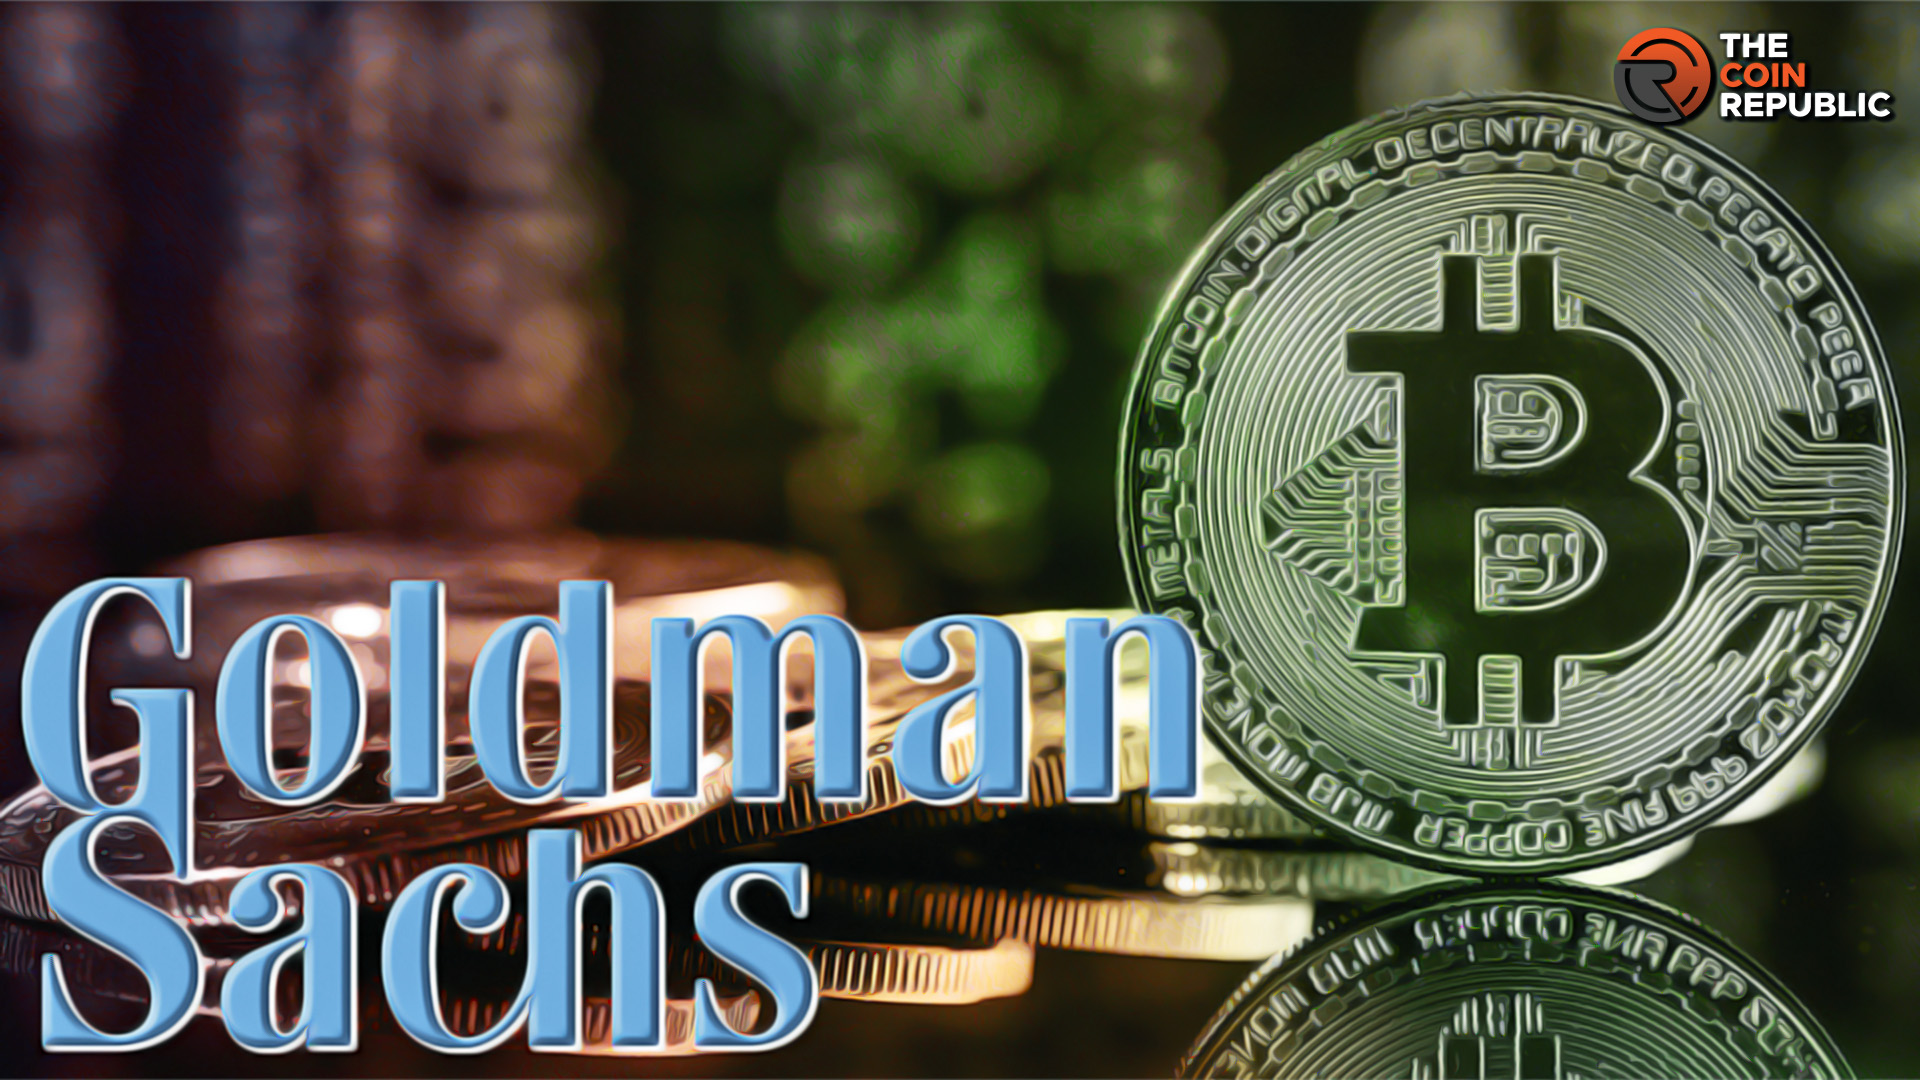 Goldman Sachs Shared Its Contradicting Views on Bitcoin ETF